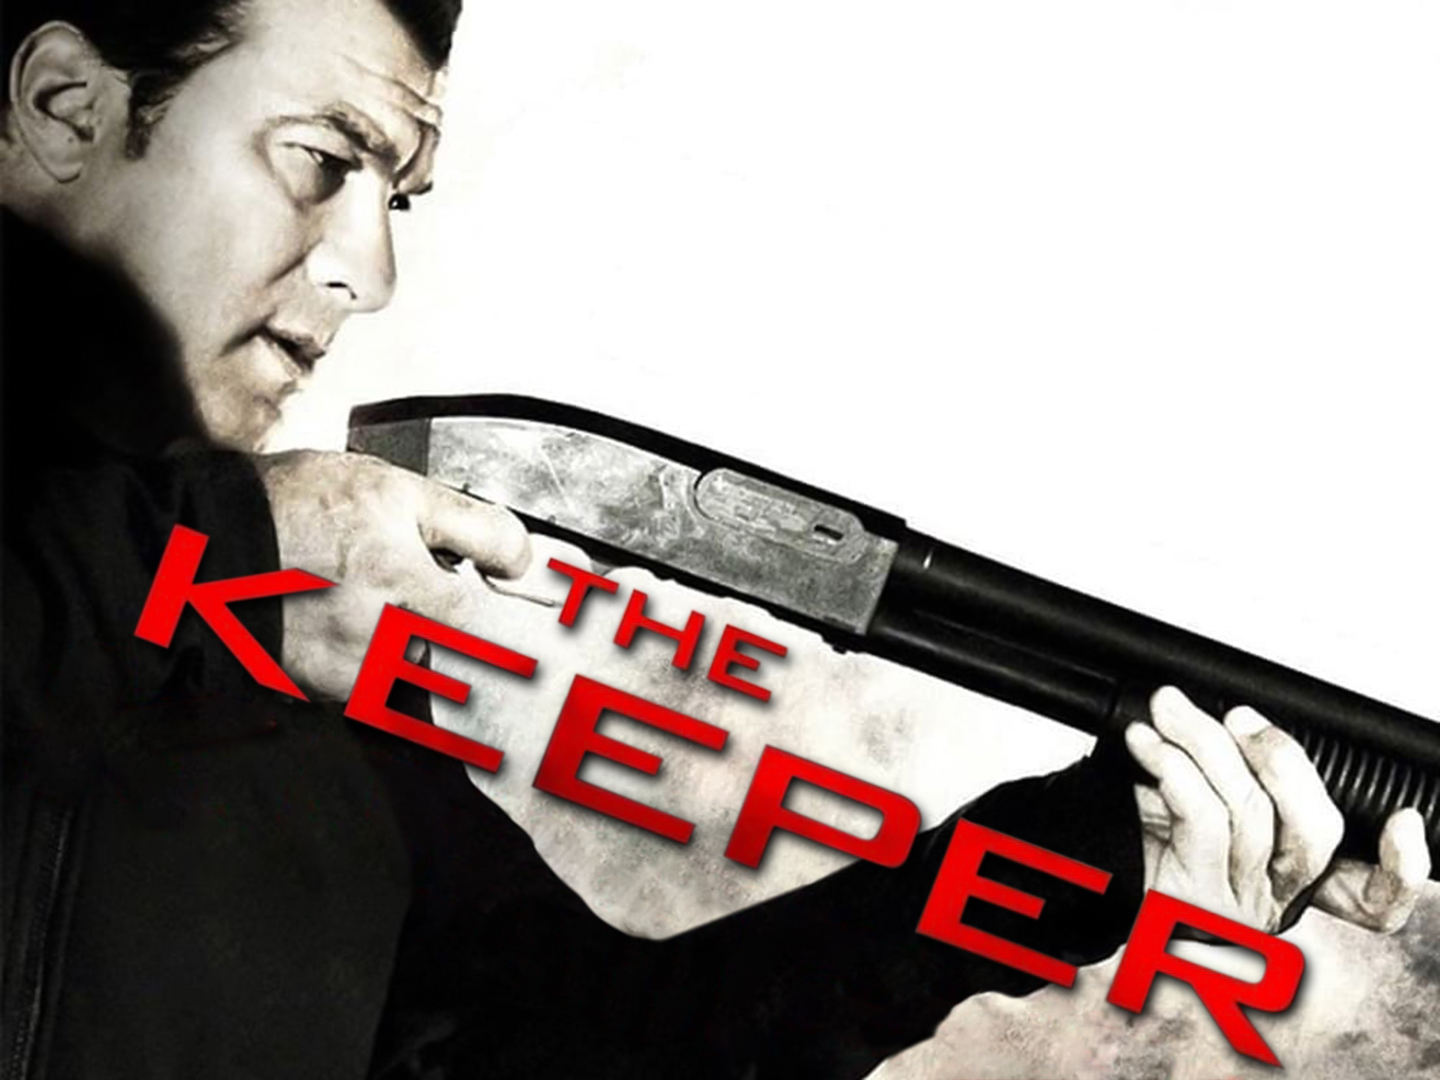 Người Nắm Giữ - The Keeper